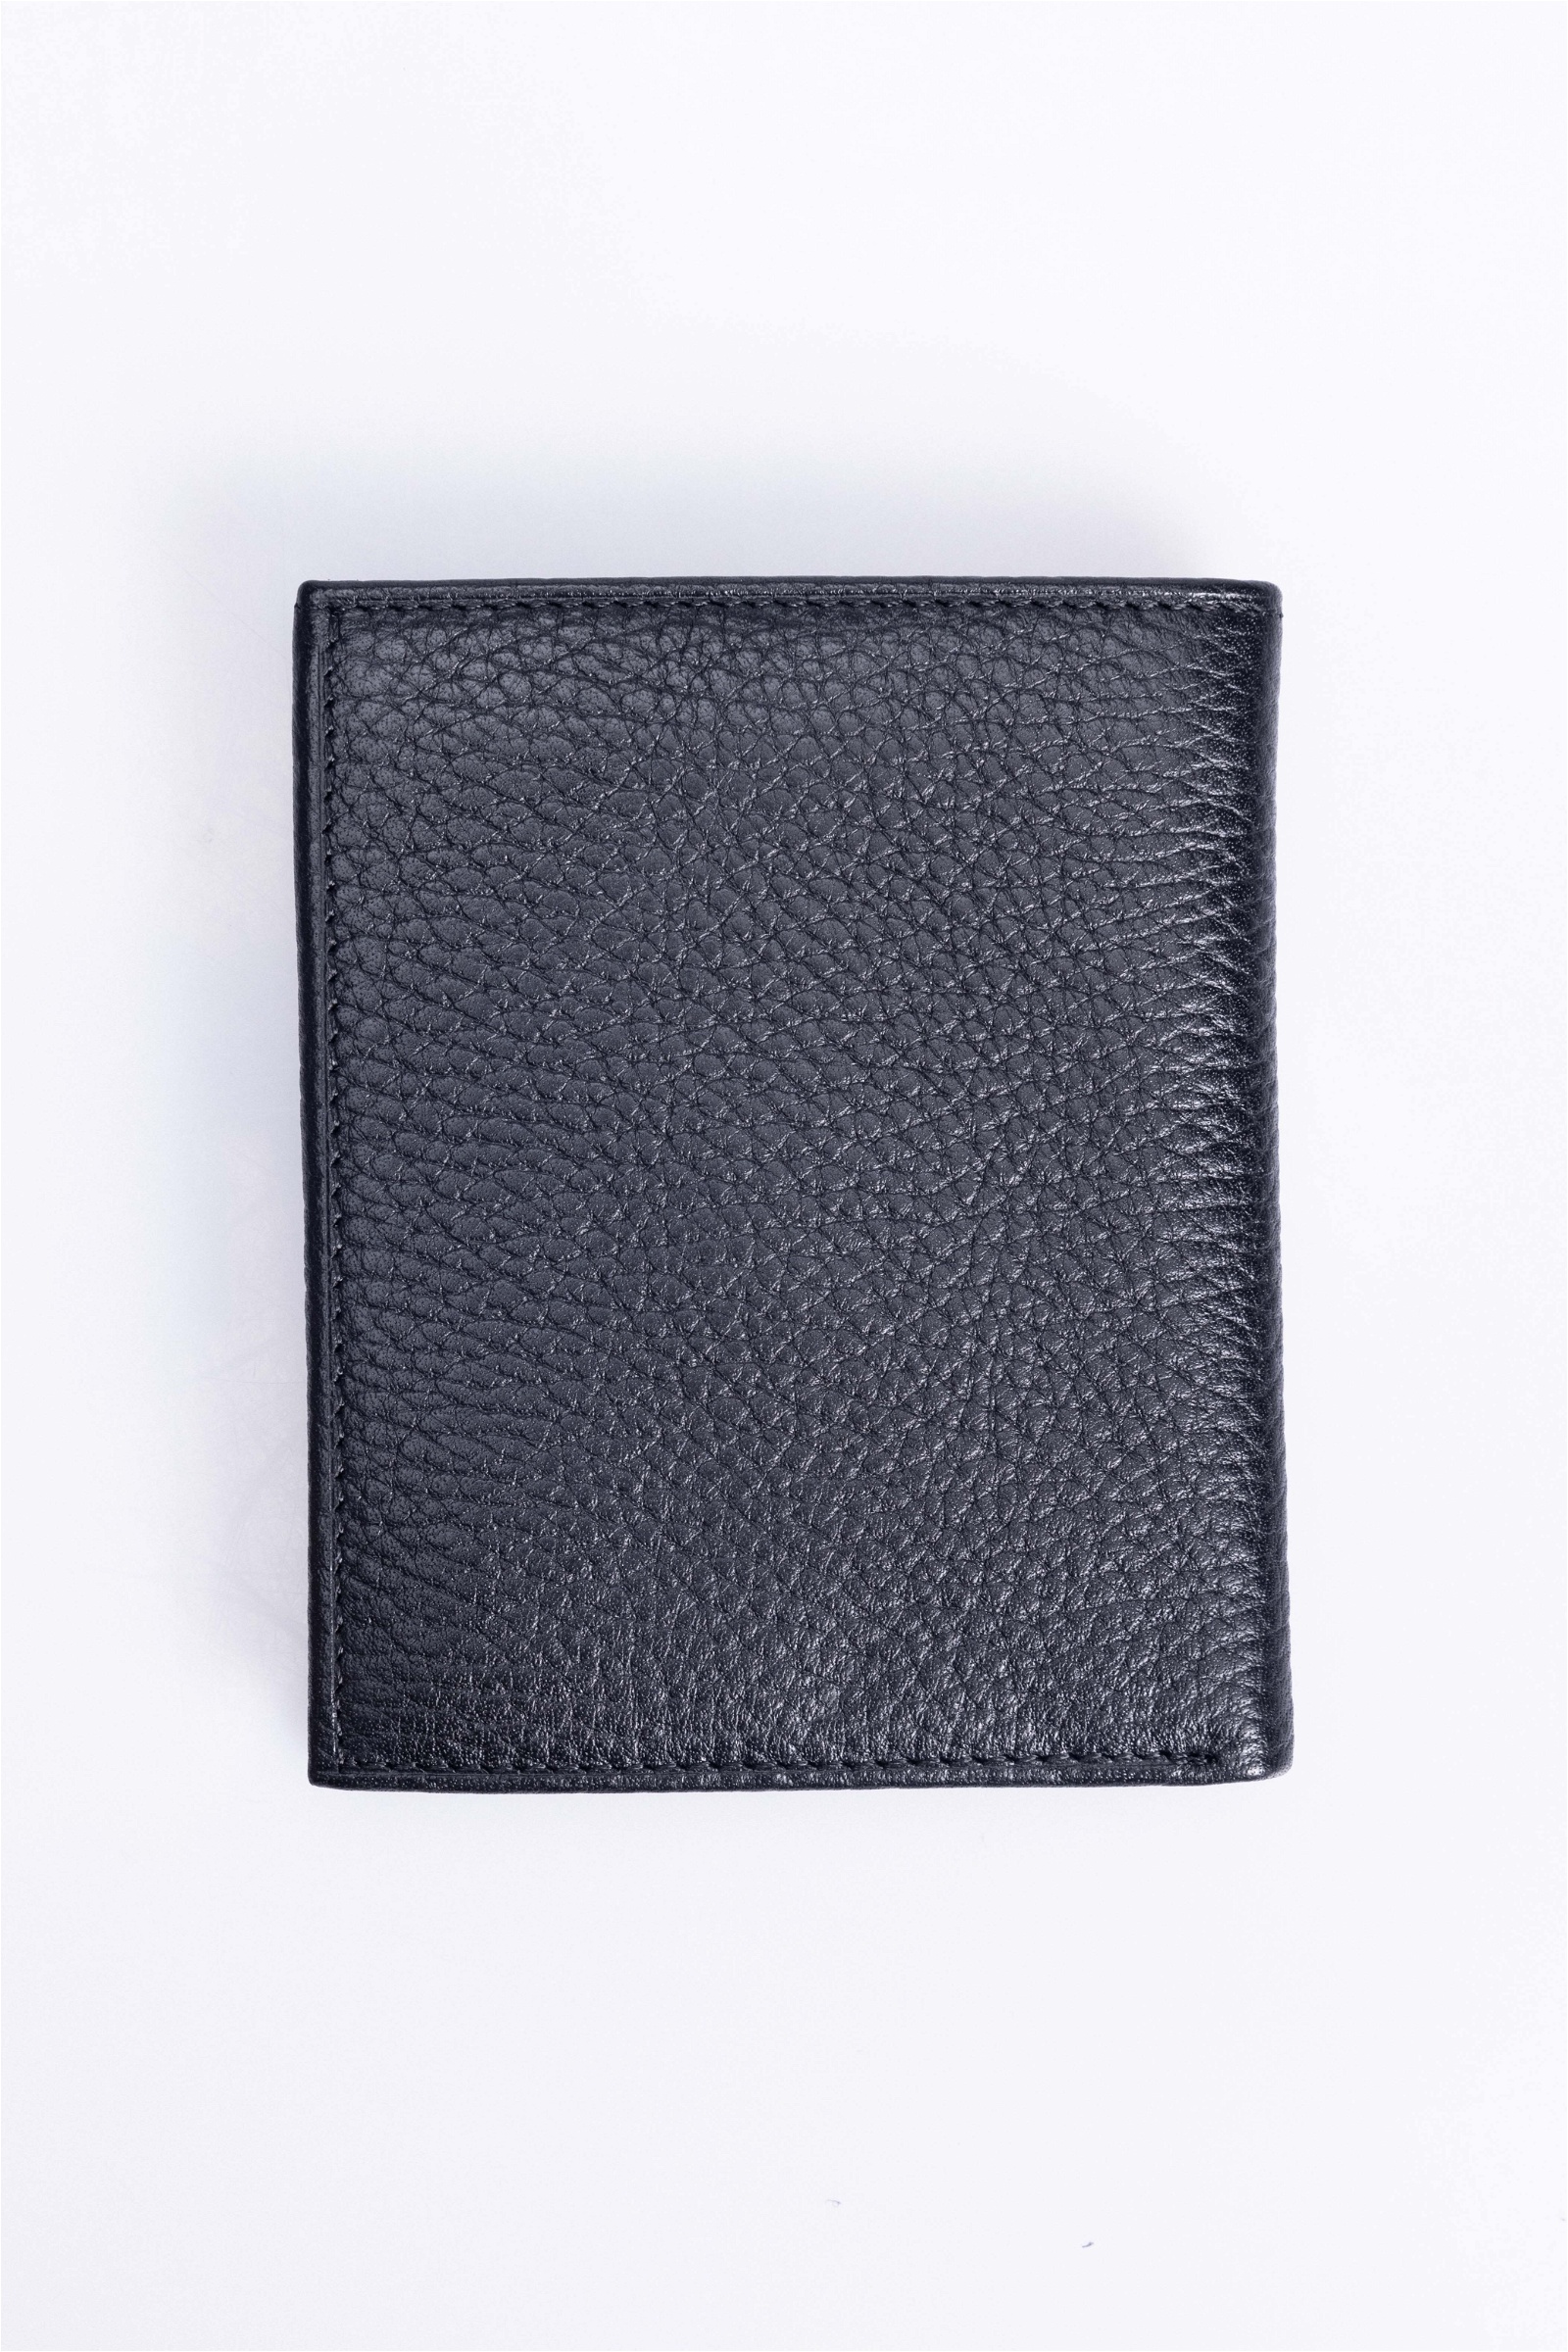 Leather Black Wallet